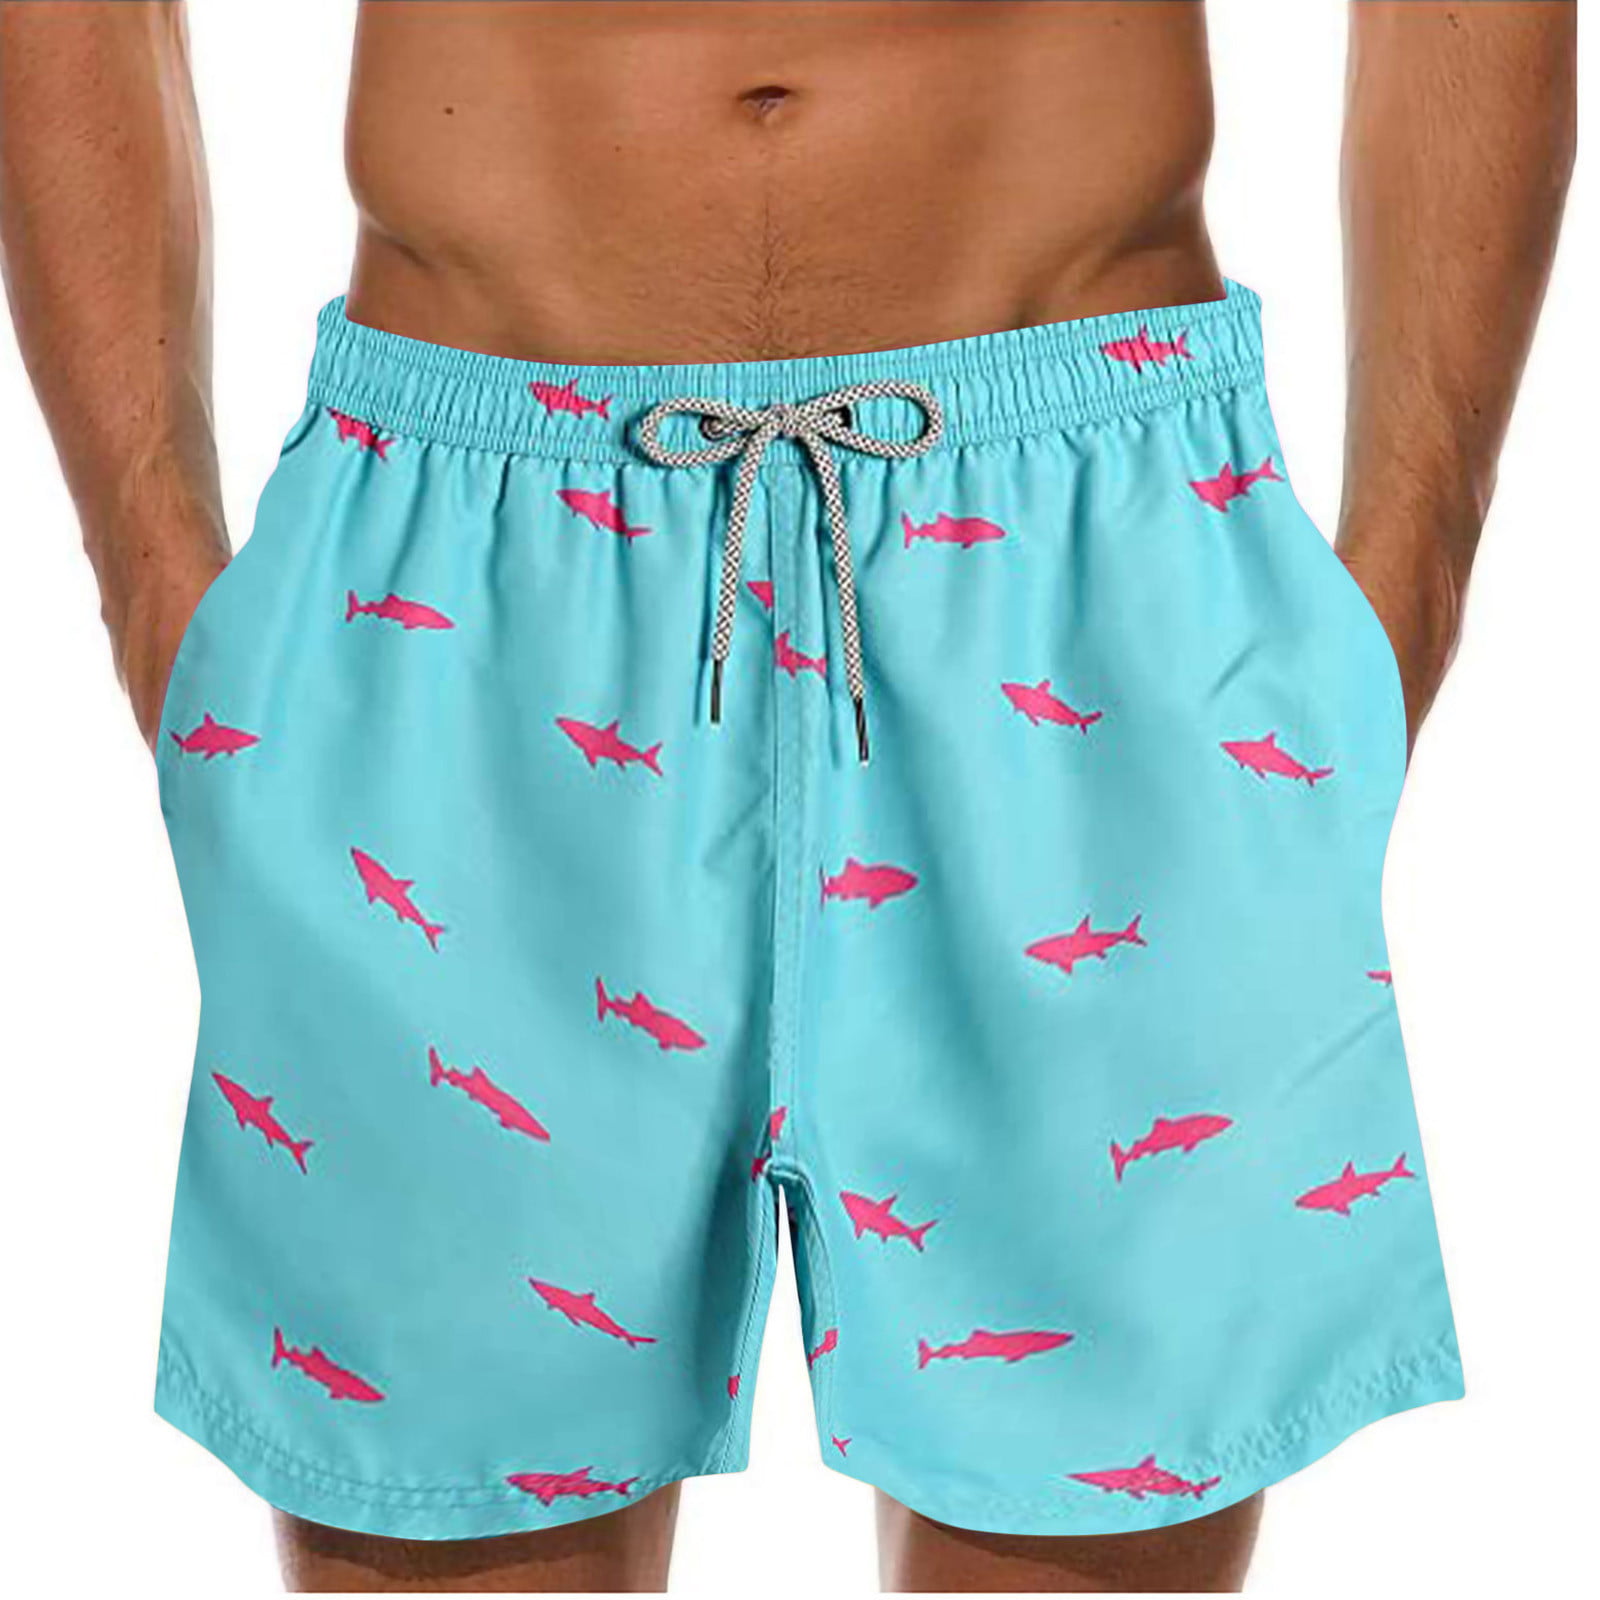 Charms Blow Pop Boyshort Medium Candy Pantie Pink Blue Logo Shorts Lingerie Gift 